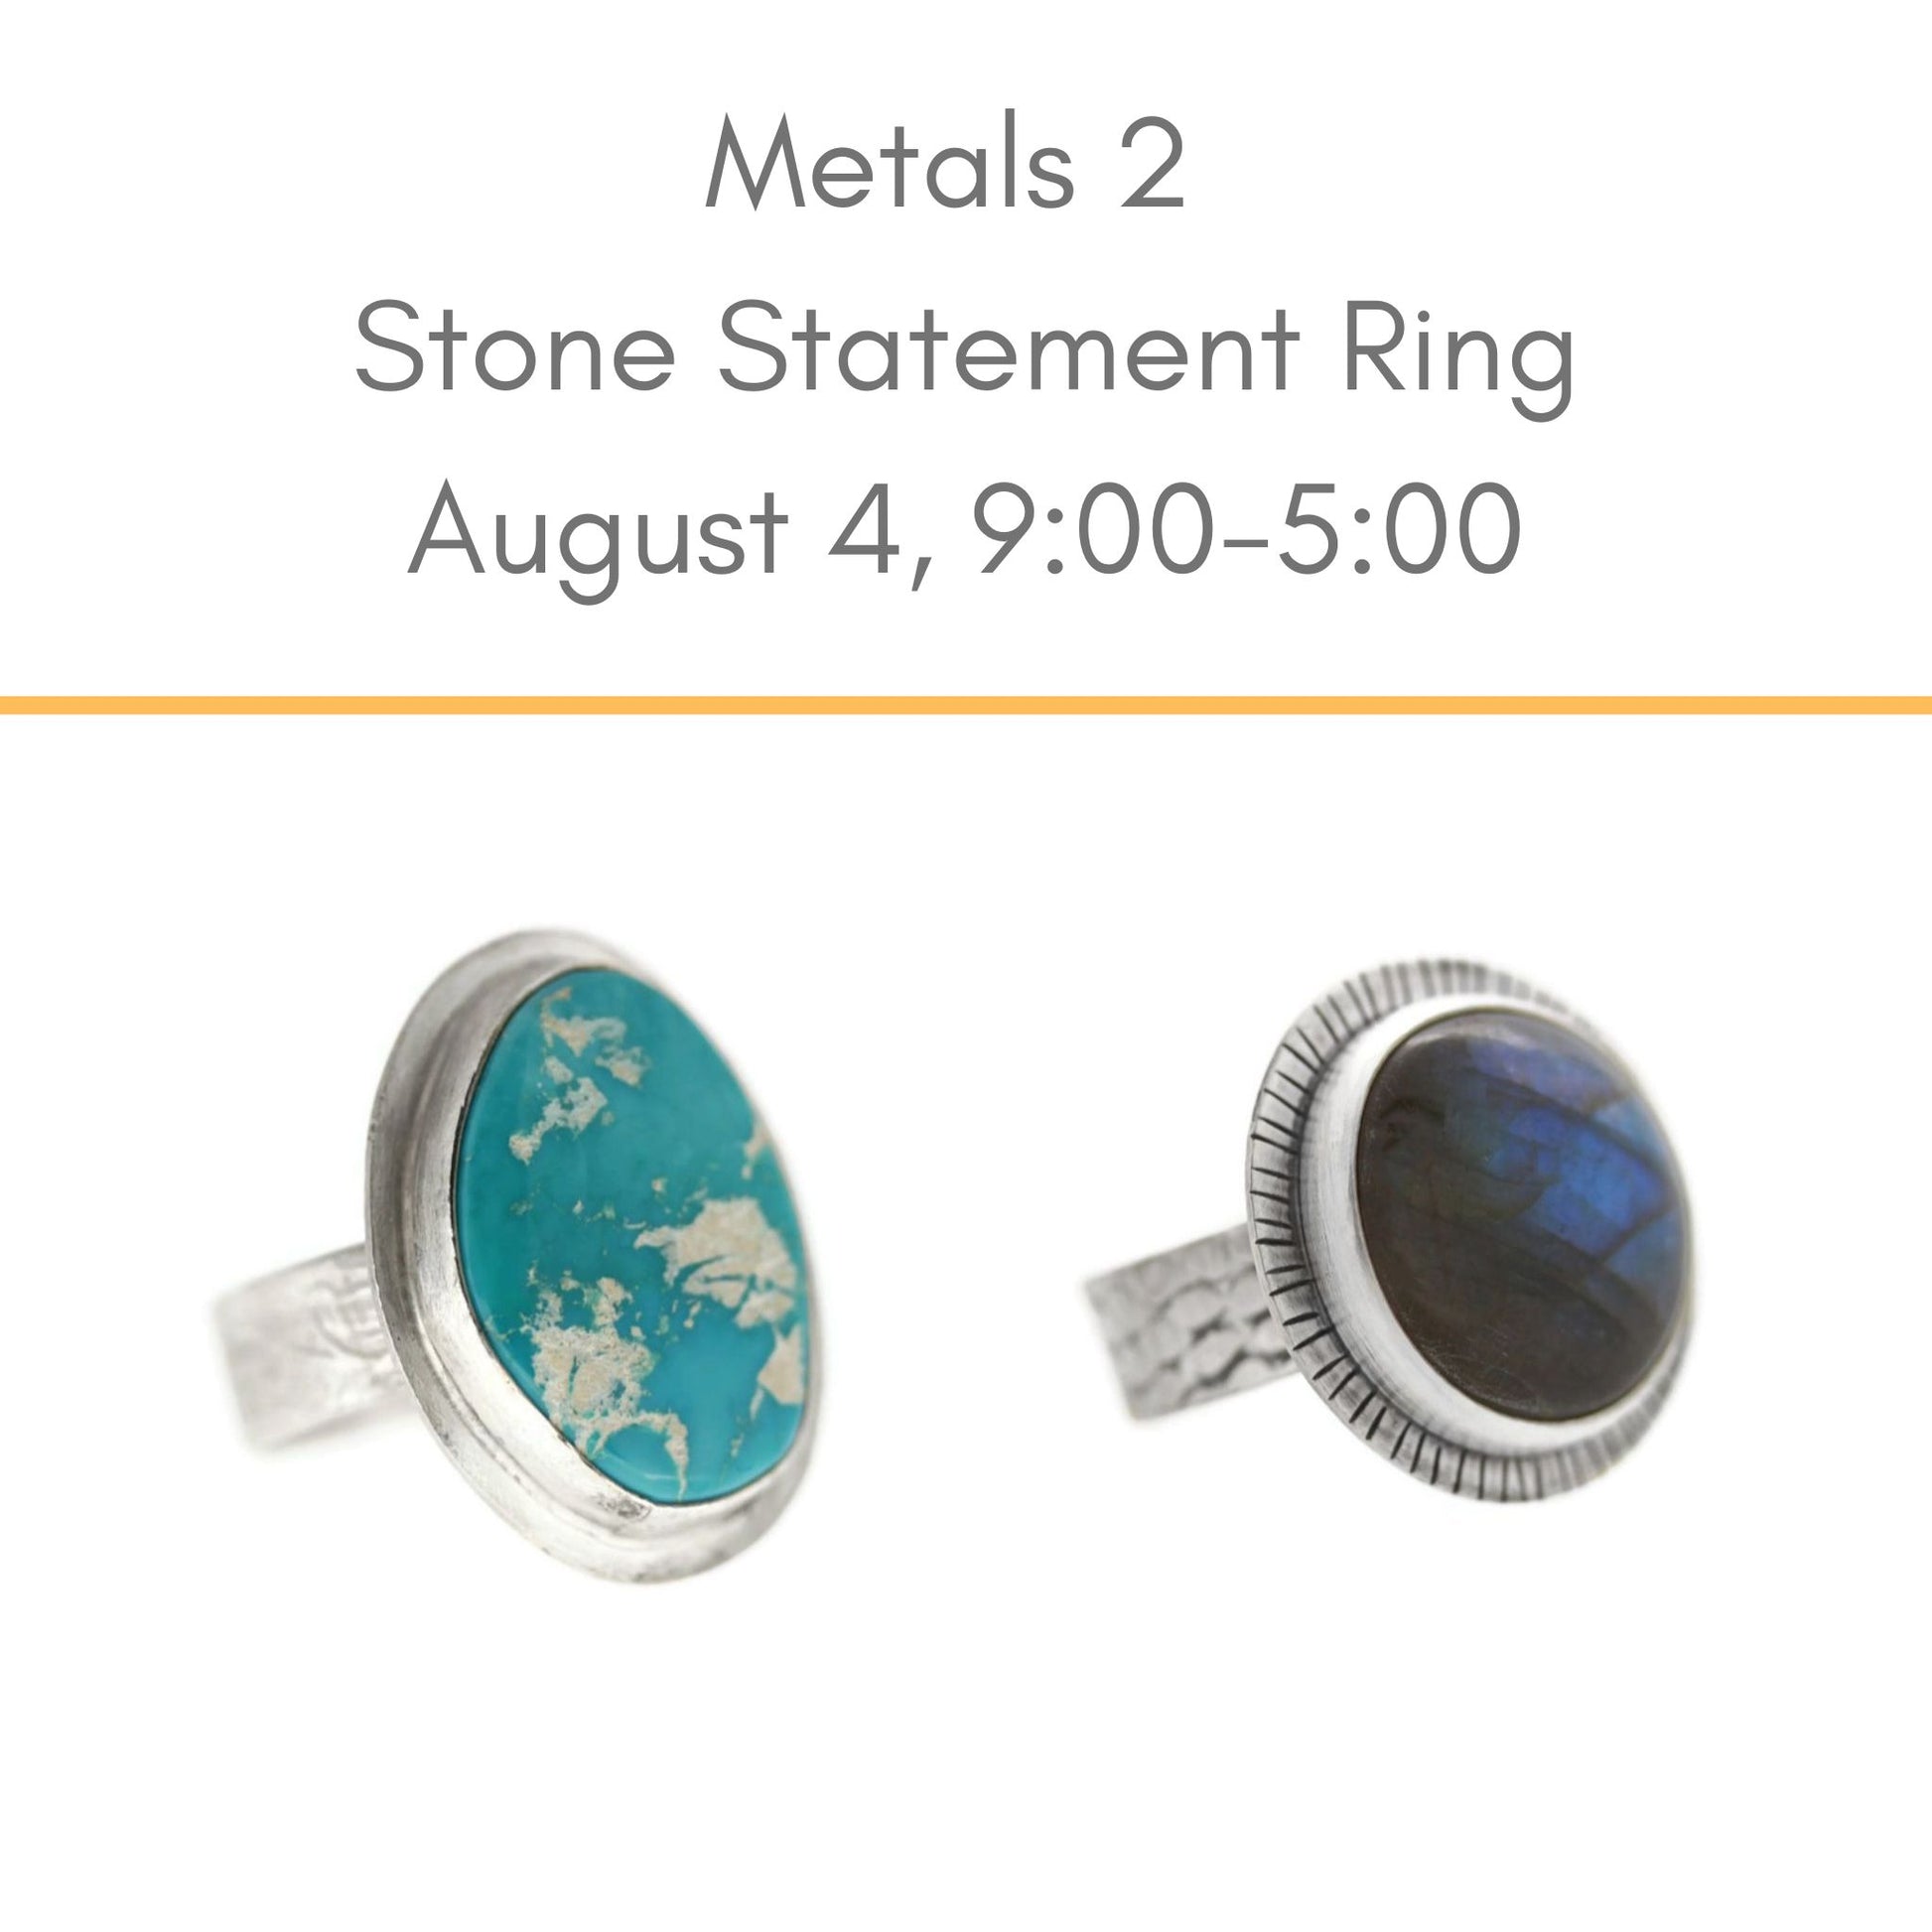 Metals 2 Stone Statement Ring August 4